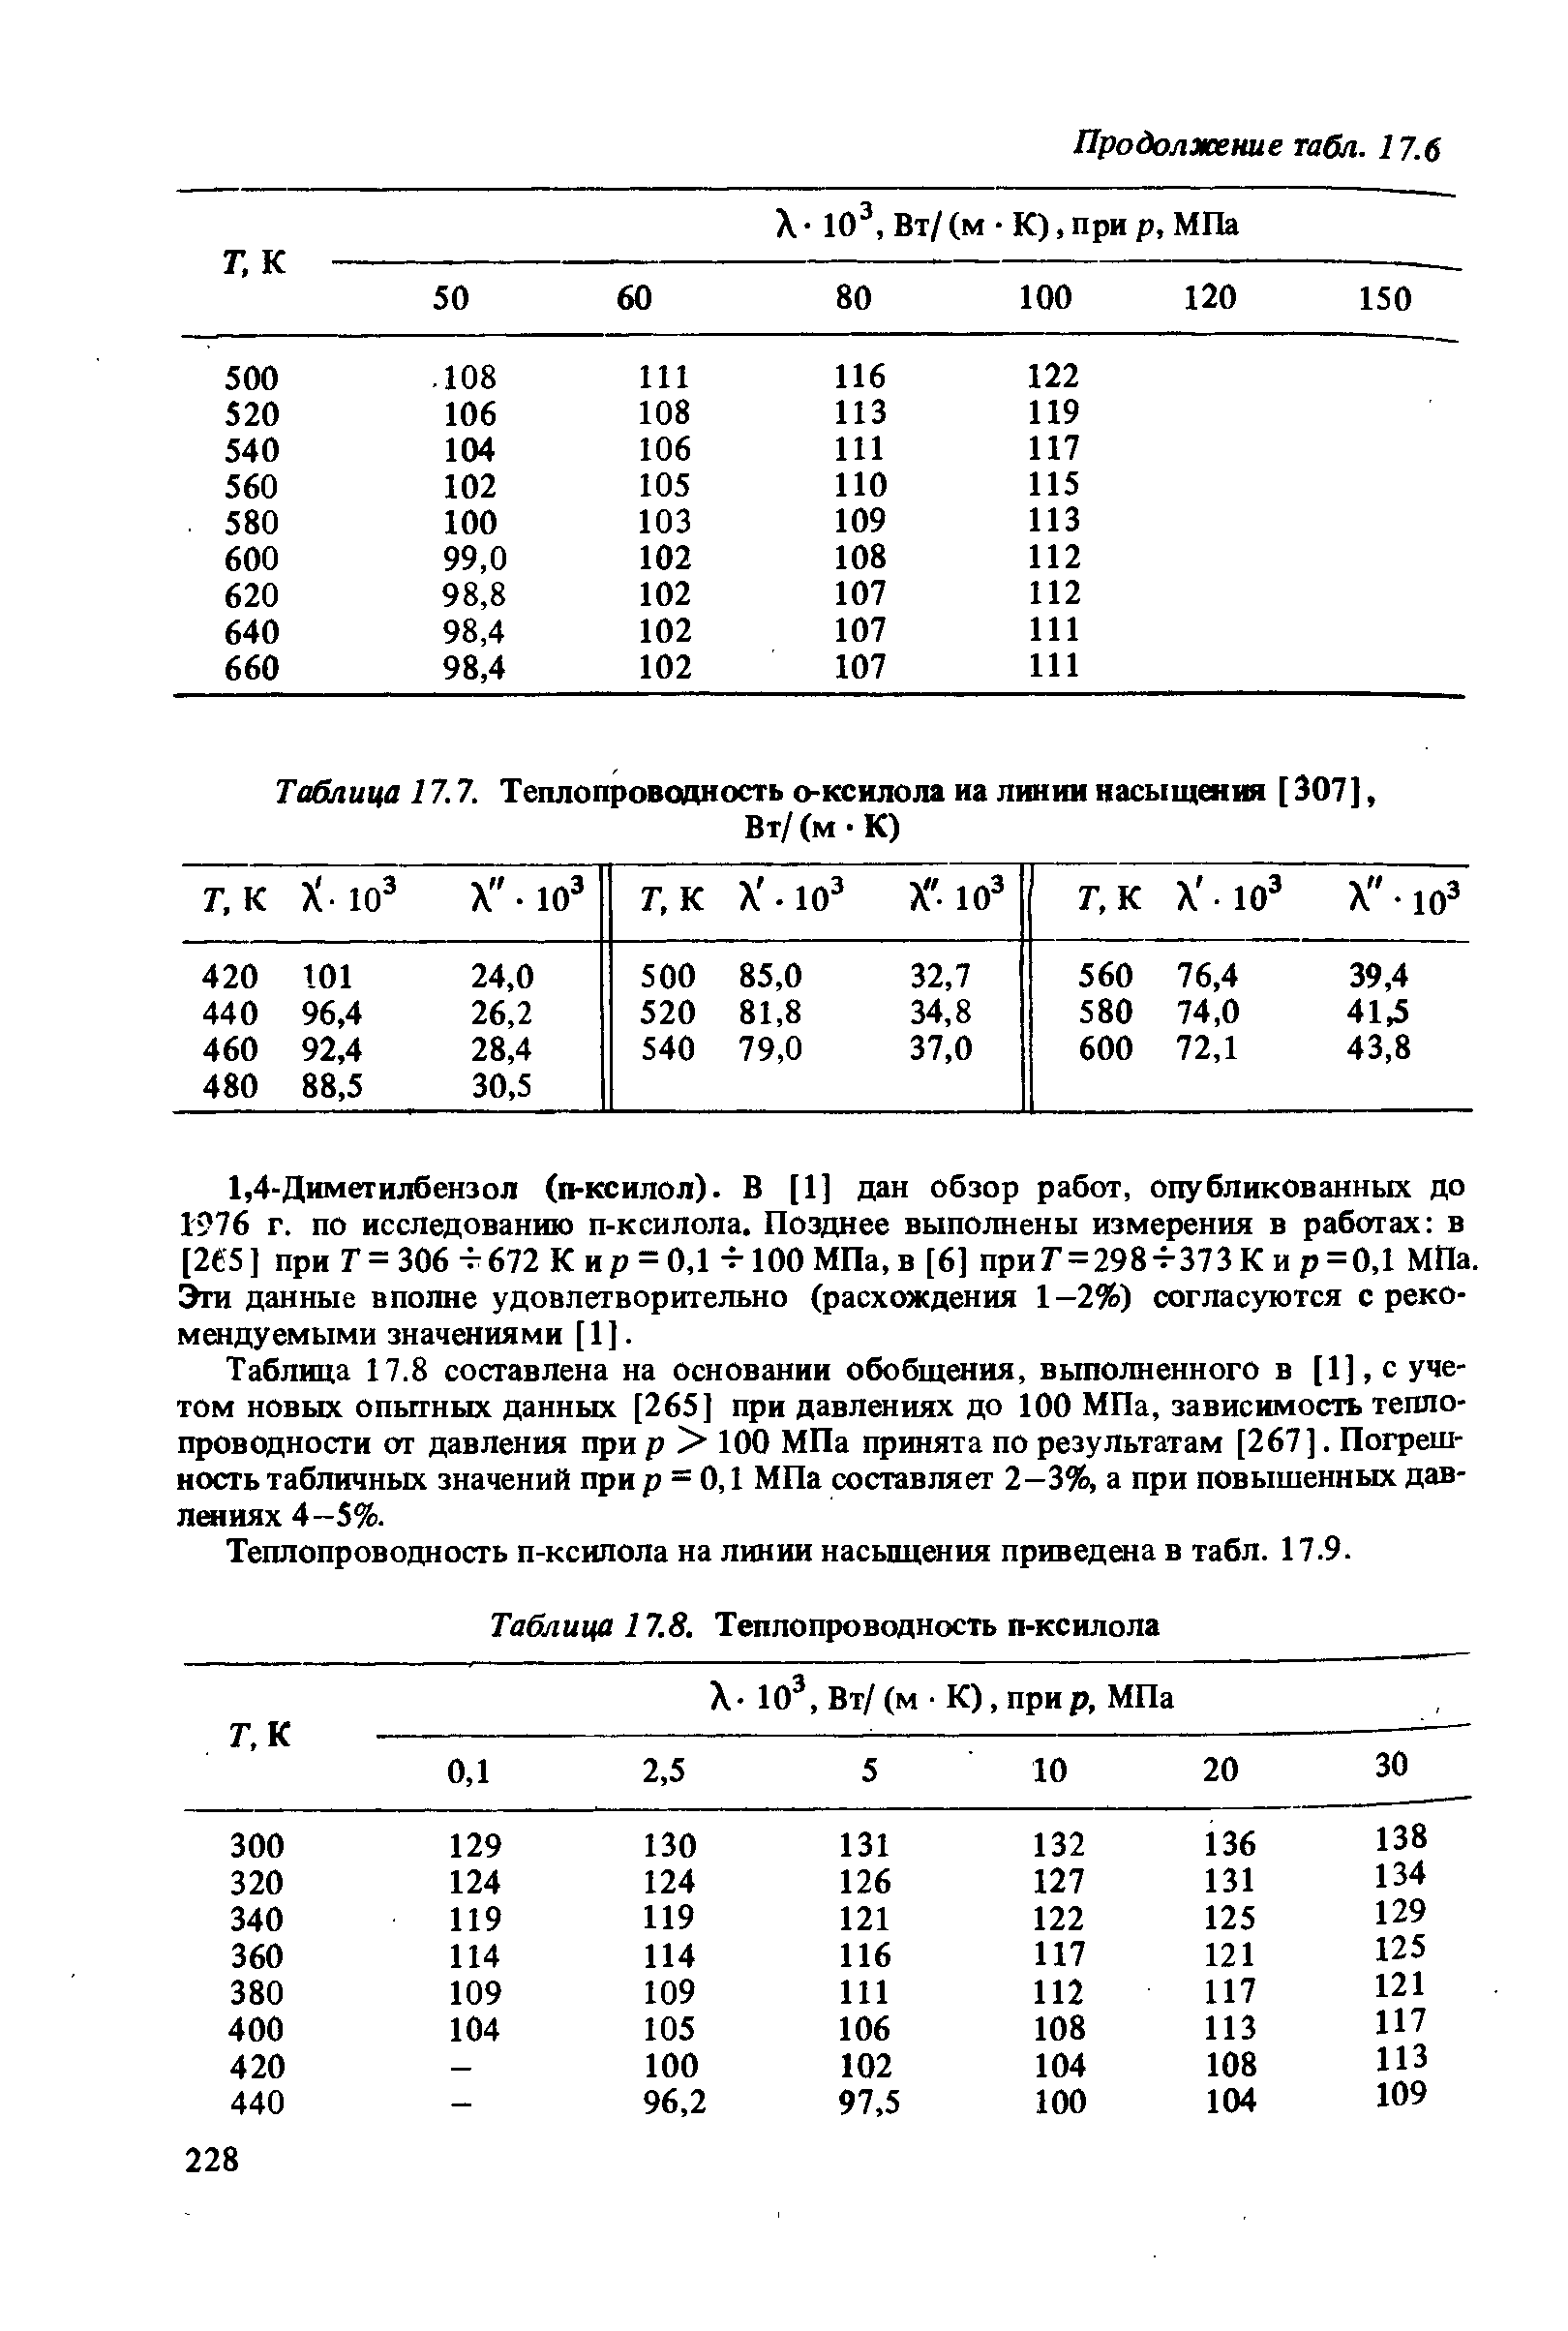 Таблица 17.8. Теплопроводность п-ксилола
